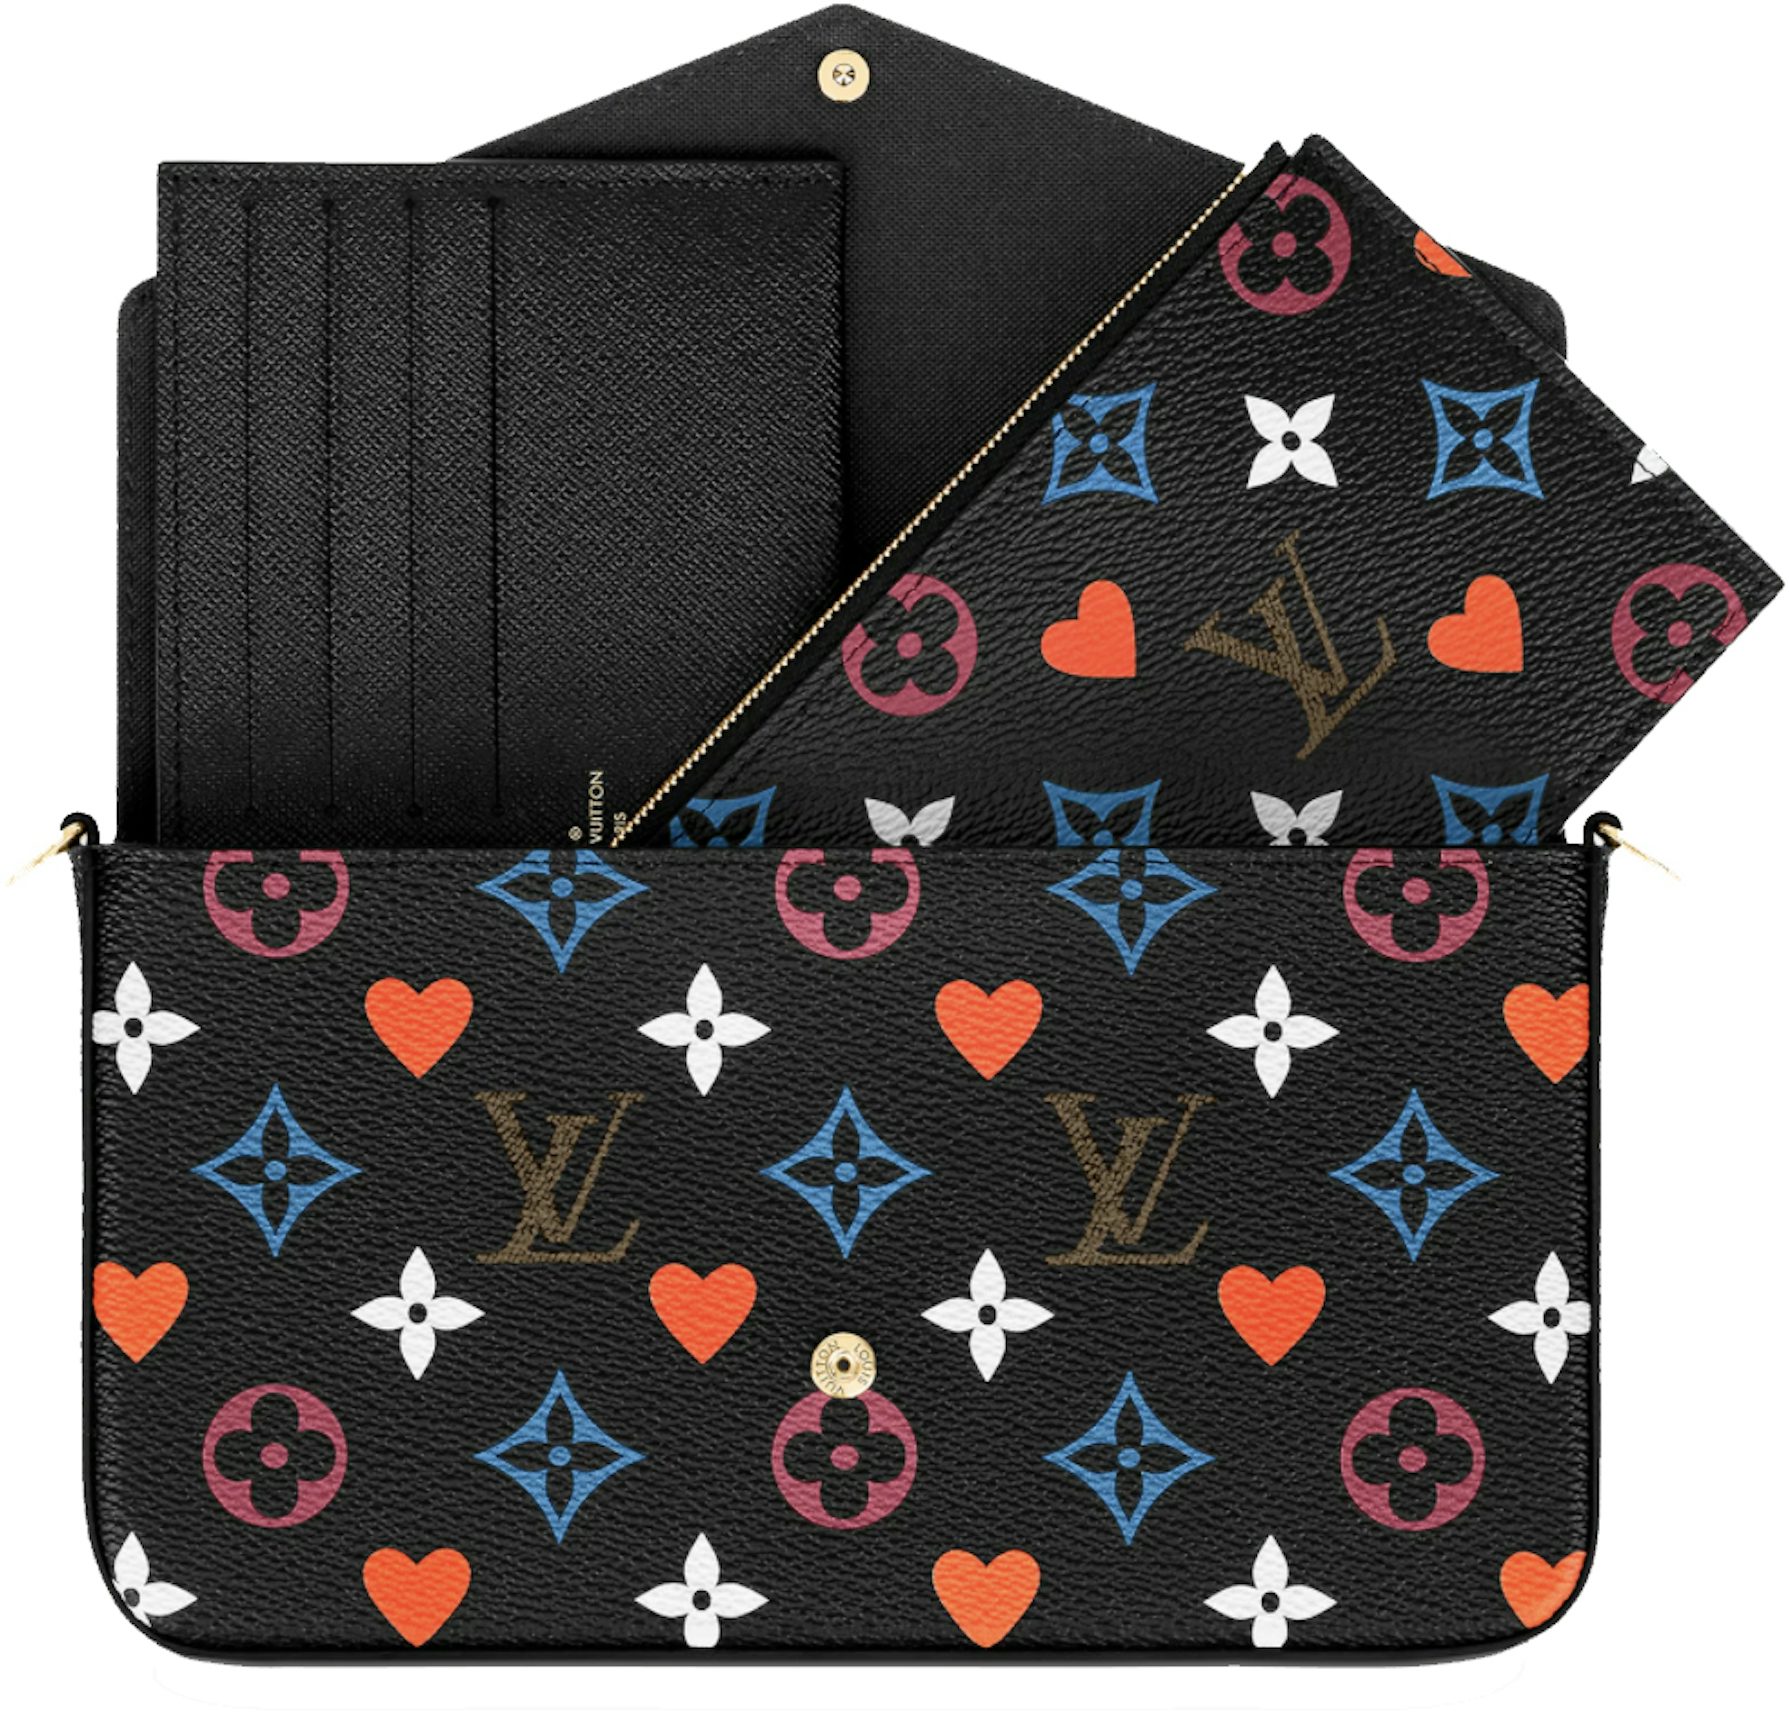 Louis Vuitton Game On Felicie Pochette — LSC INC